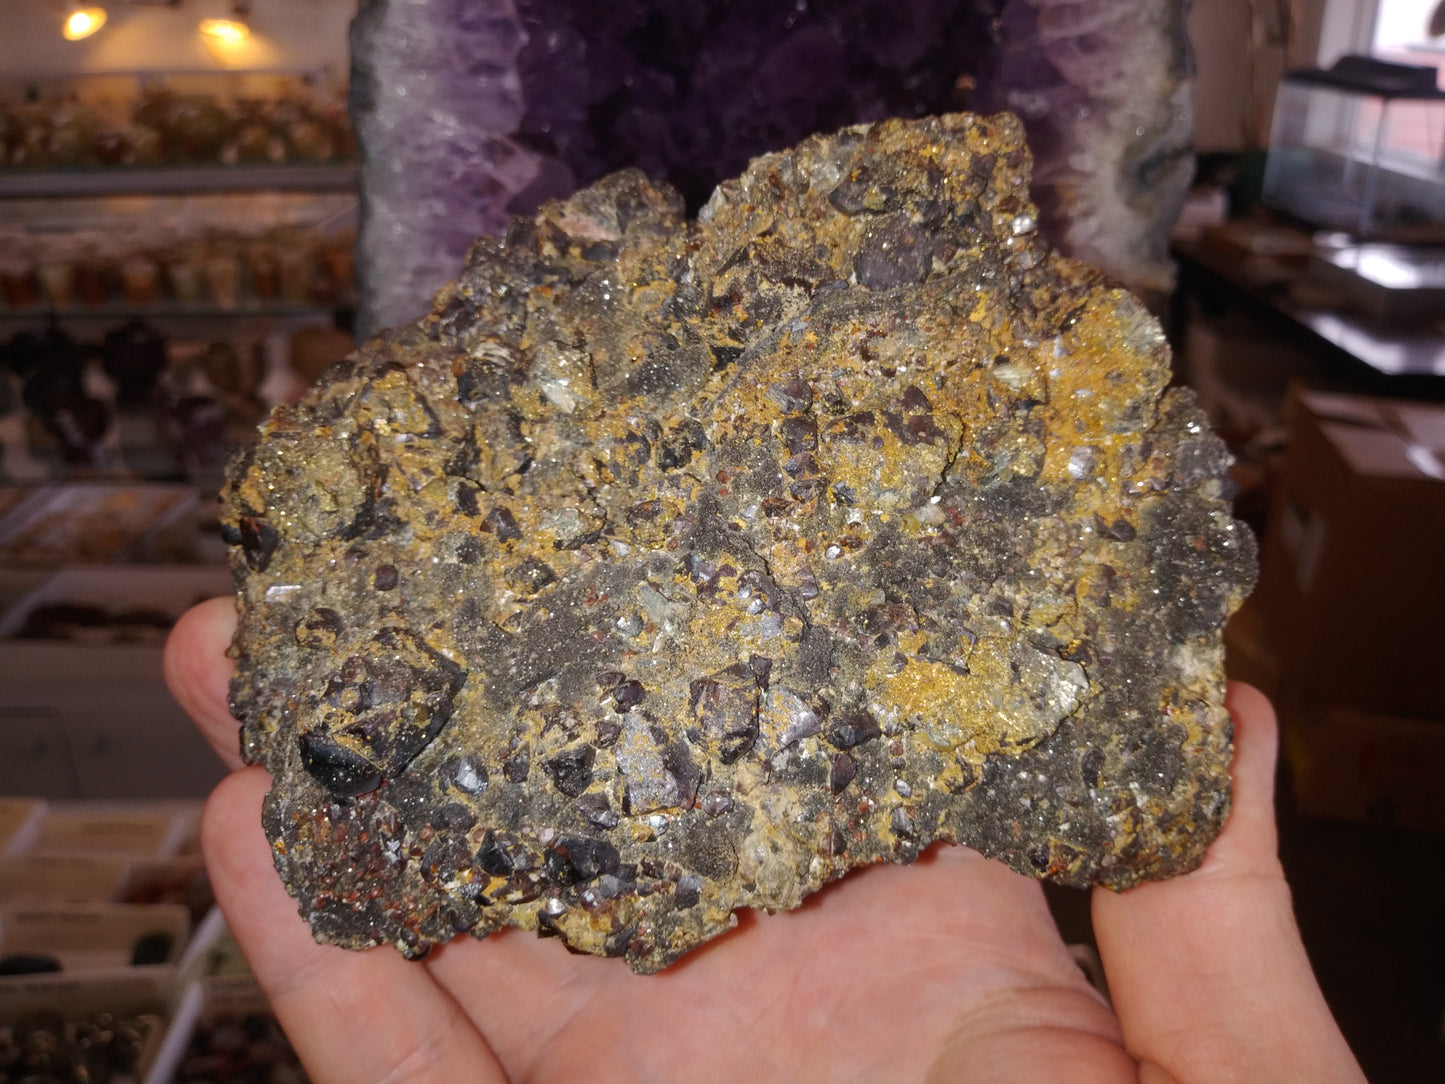 Tri-State (Joplin) Breccia - Sphalerite, Pyrite, Marcasite, Chalcopyrite, and Quartz with Chert